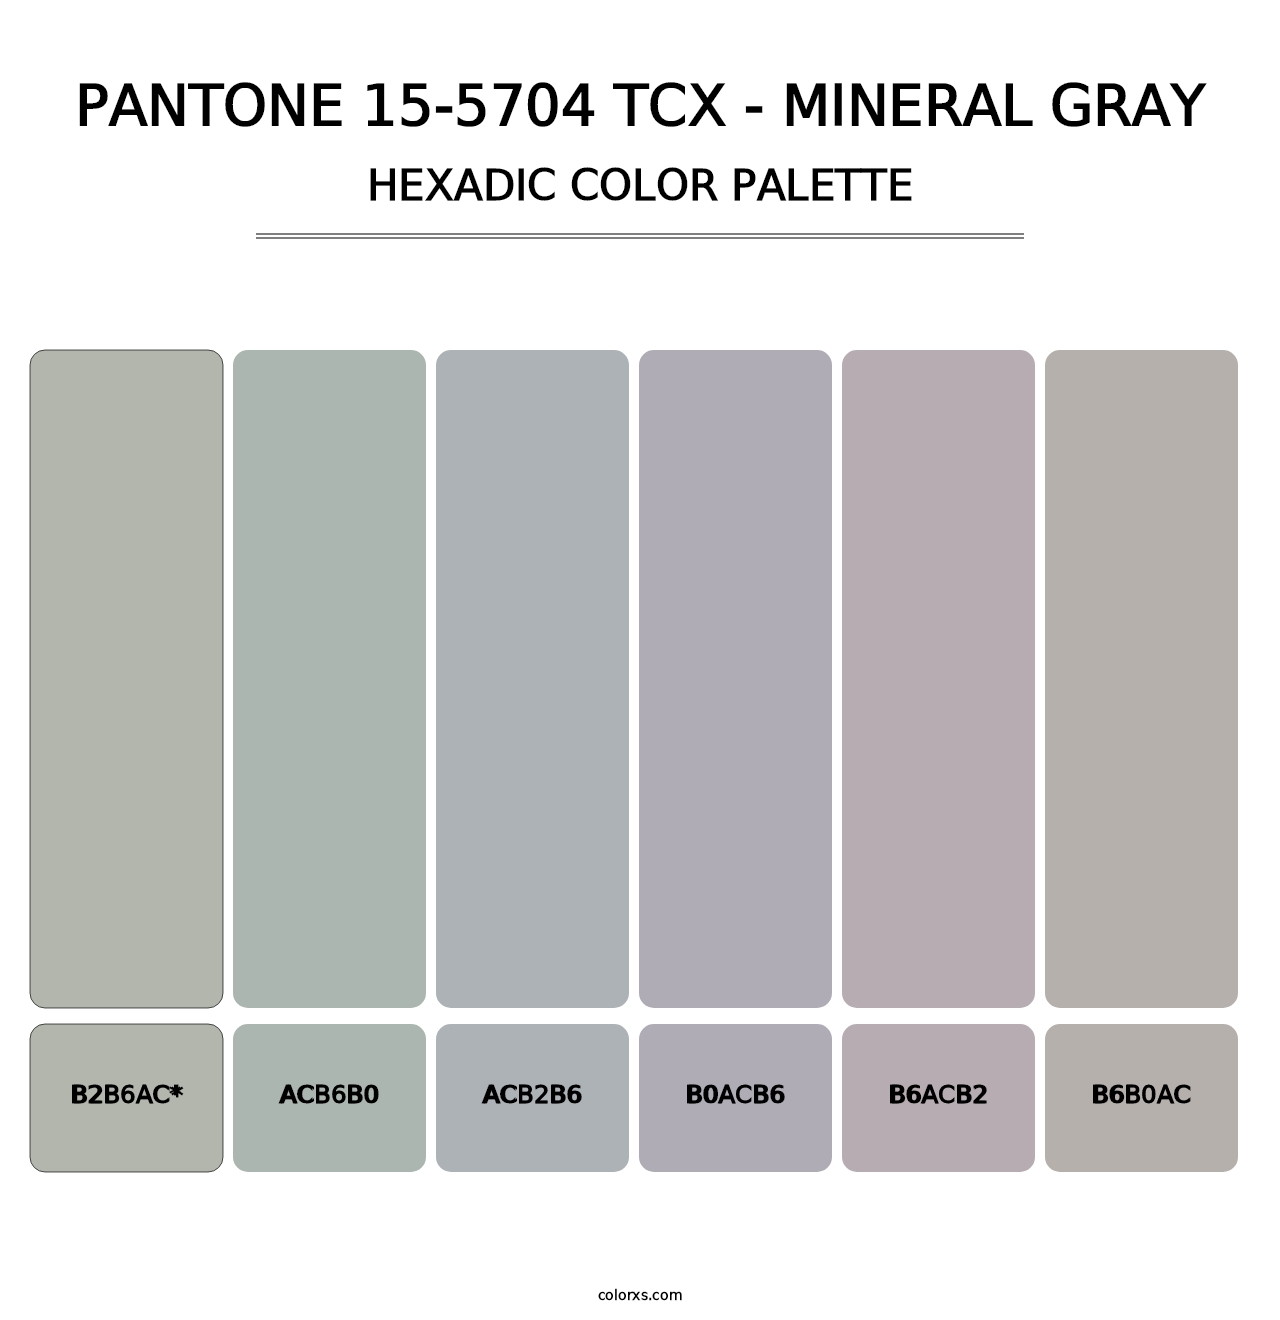 PANTONE 15-5704 TCX - Mineral Gray - Hexadic Color Palette